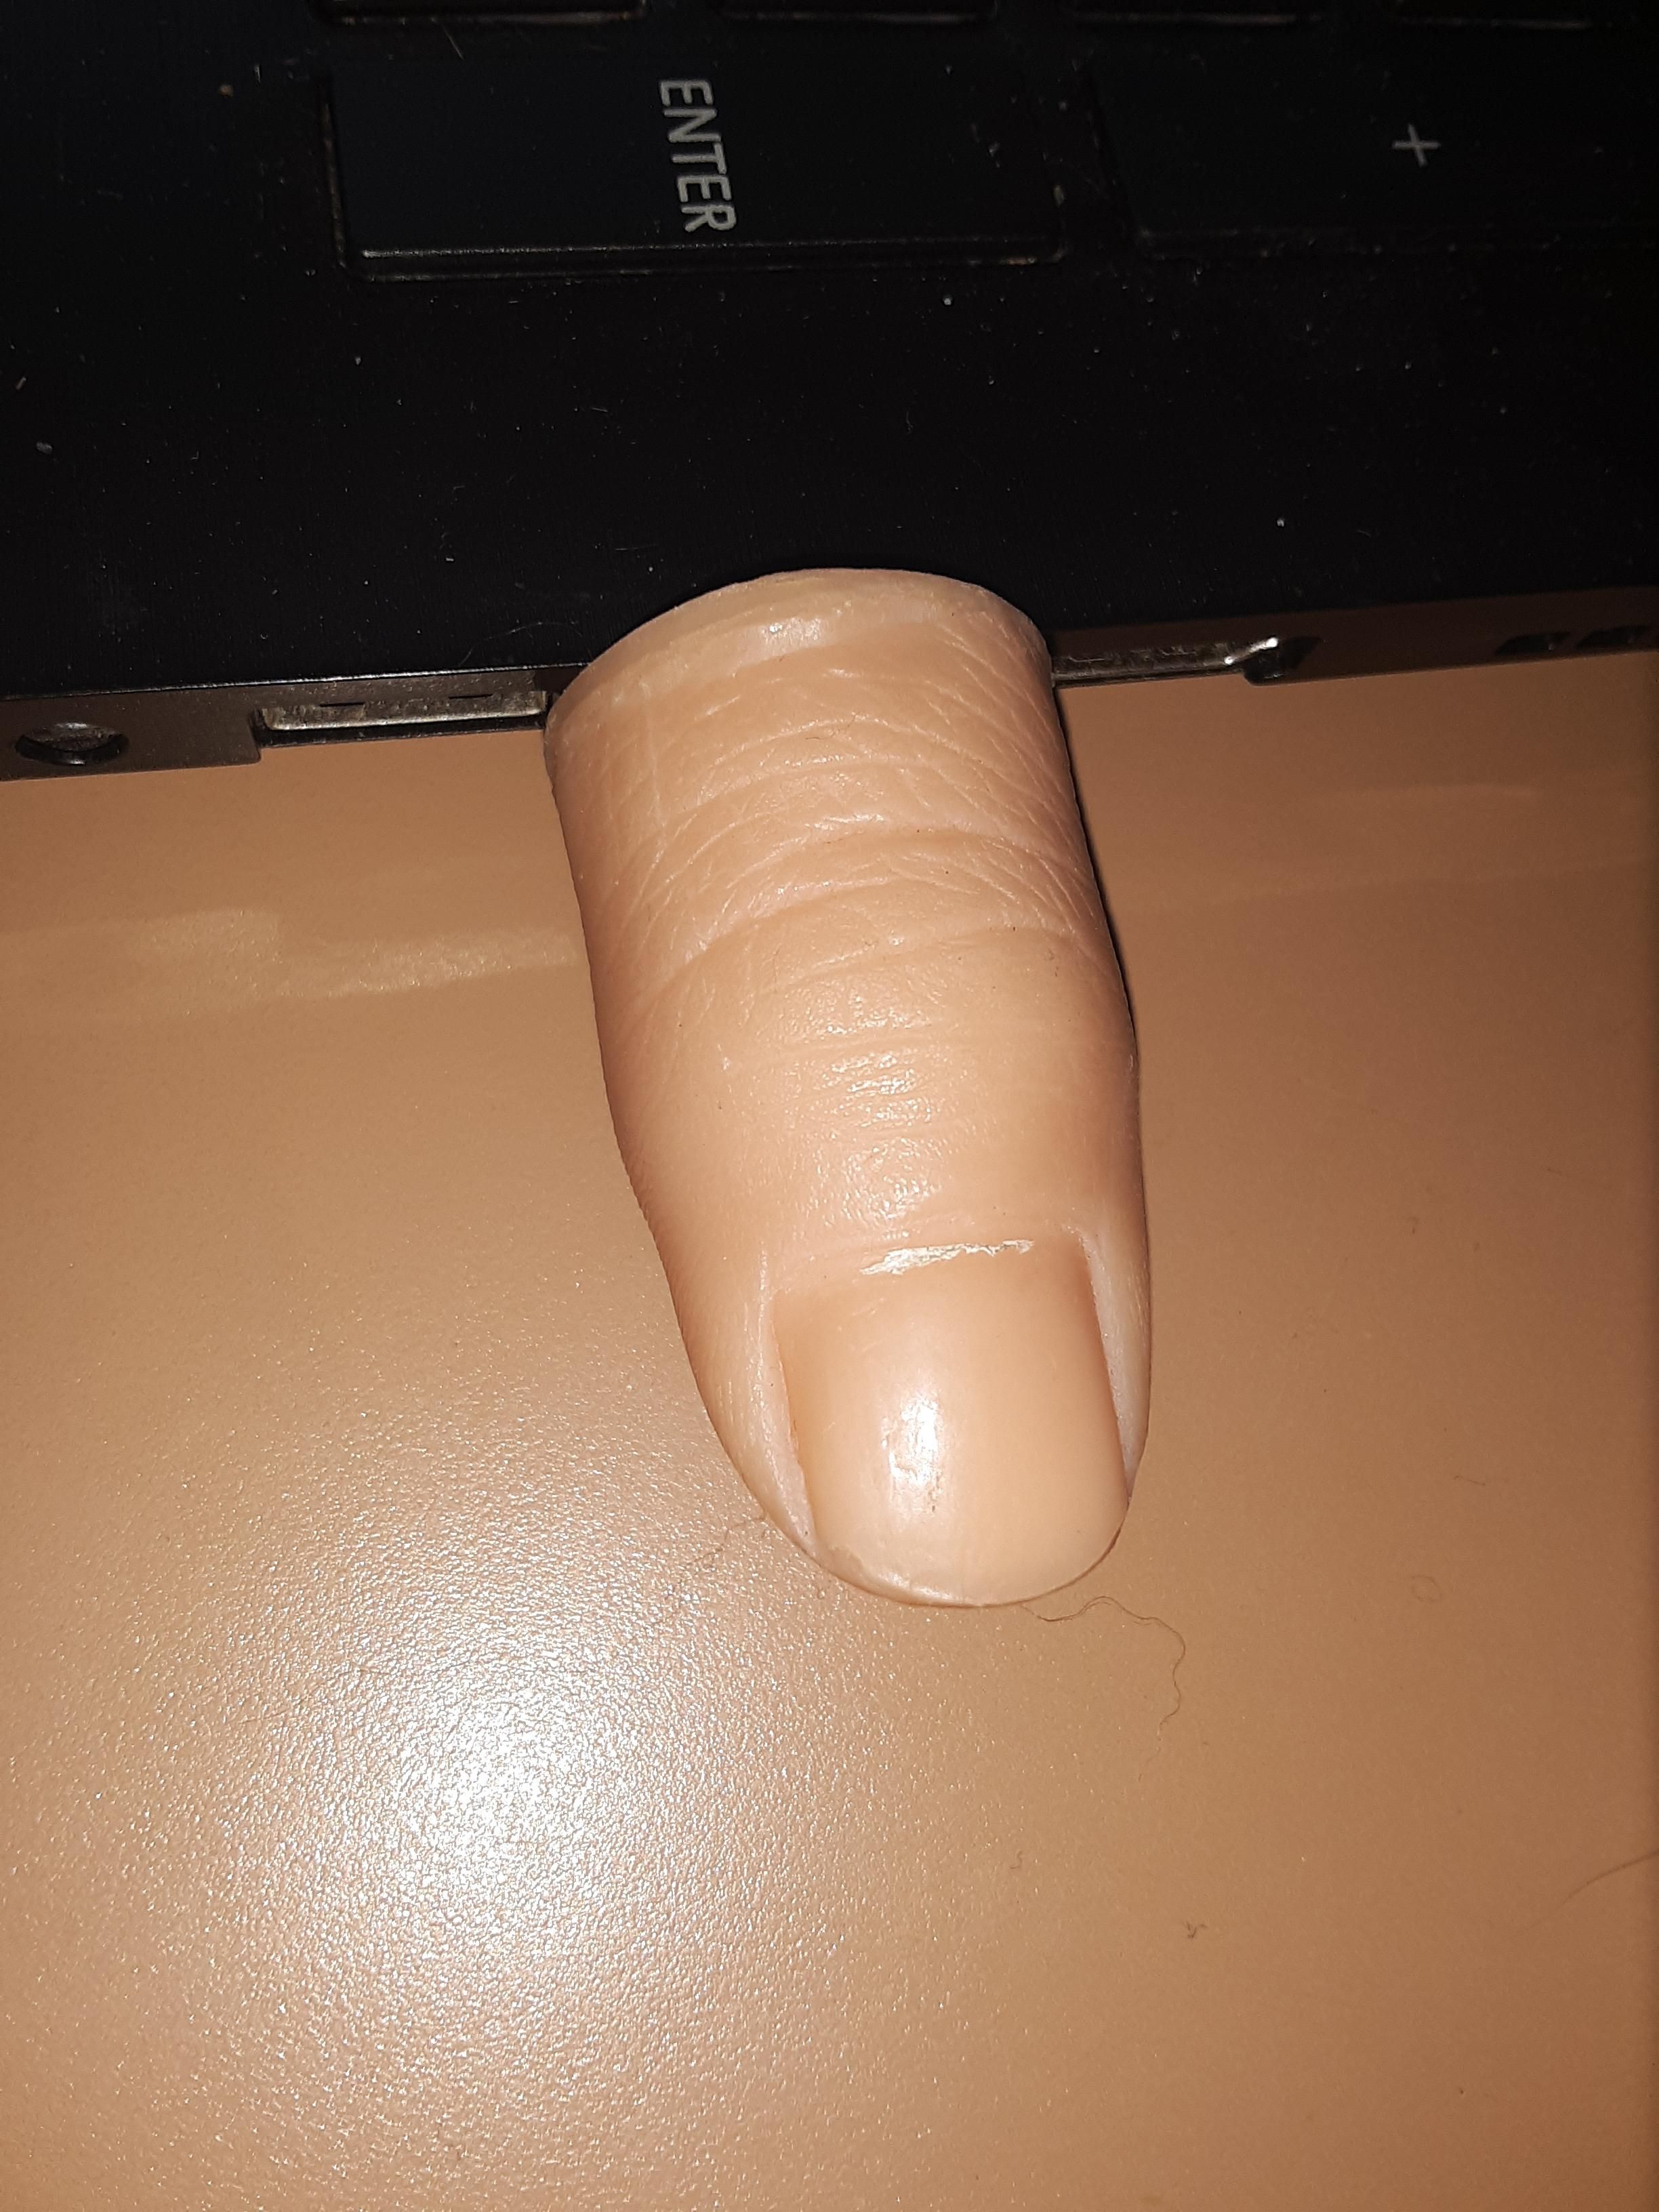 My partner doesn't appreciate my thumb drive.